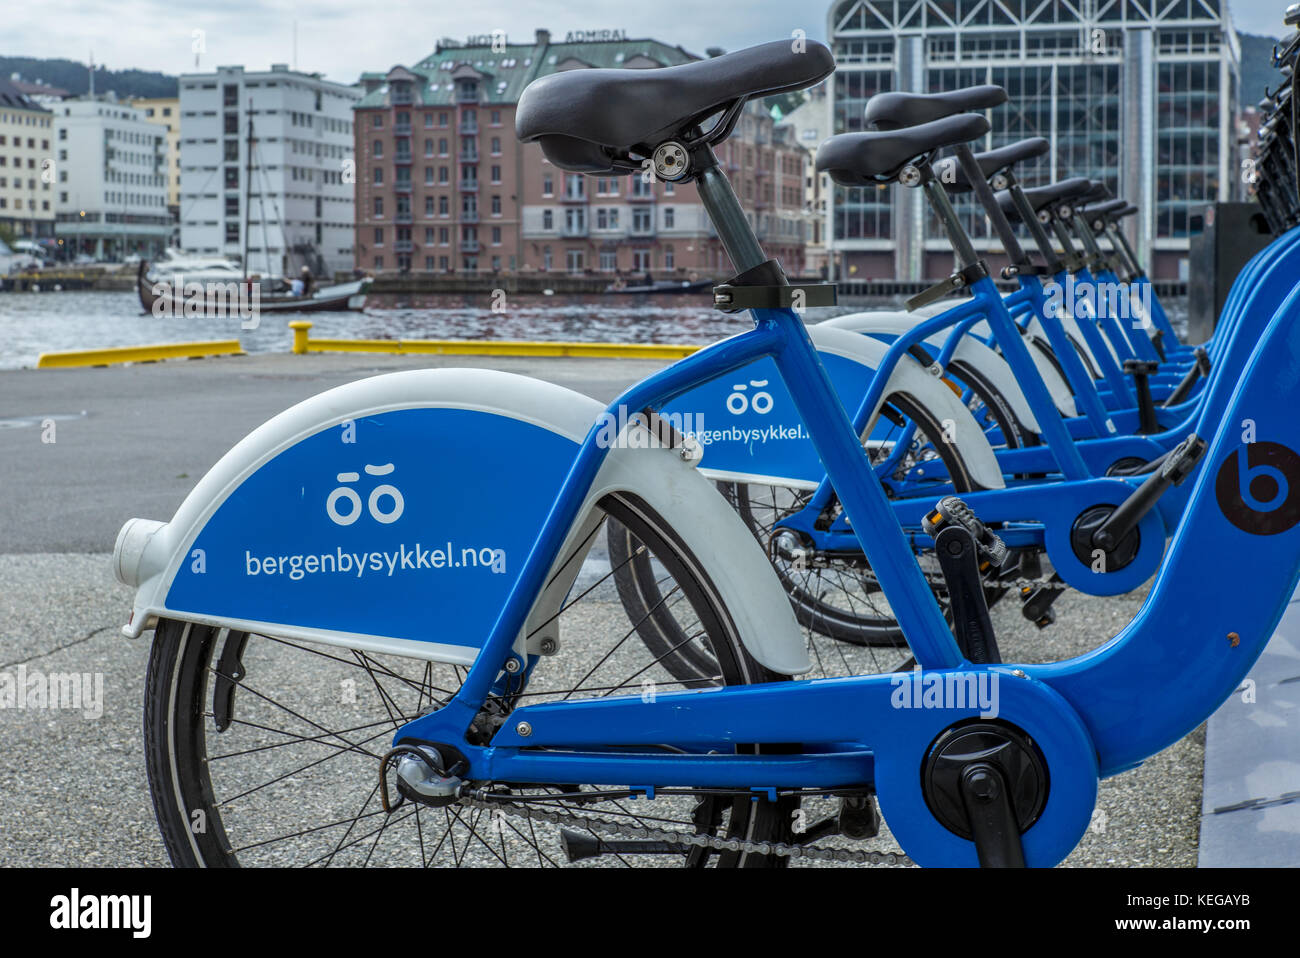 NORWAY, BERGEN - AUGUST 8, 2017: Parked bikes of the bike sharing program bergenbysykkel in Bergen - 2 Stock Photo